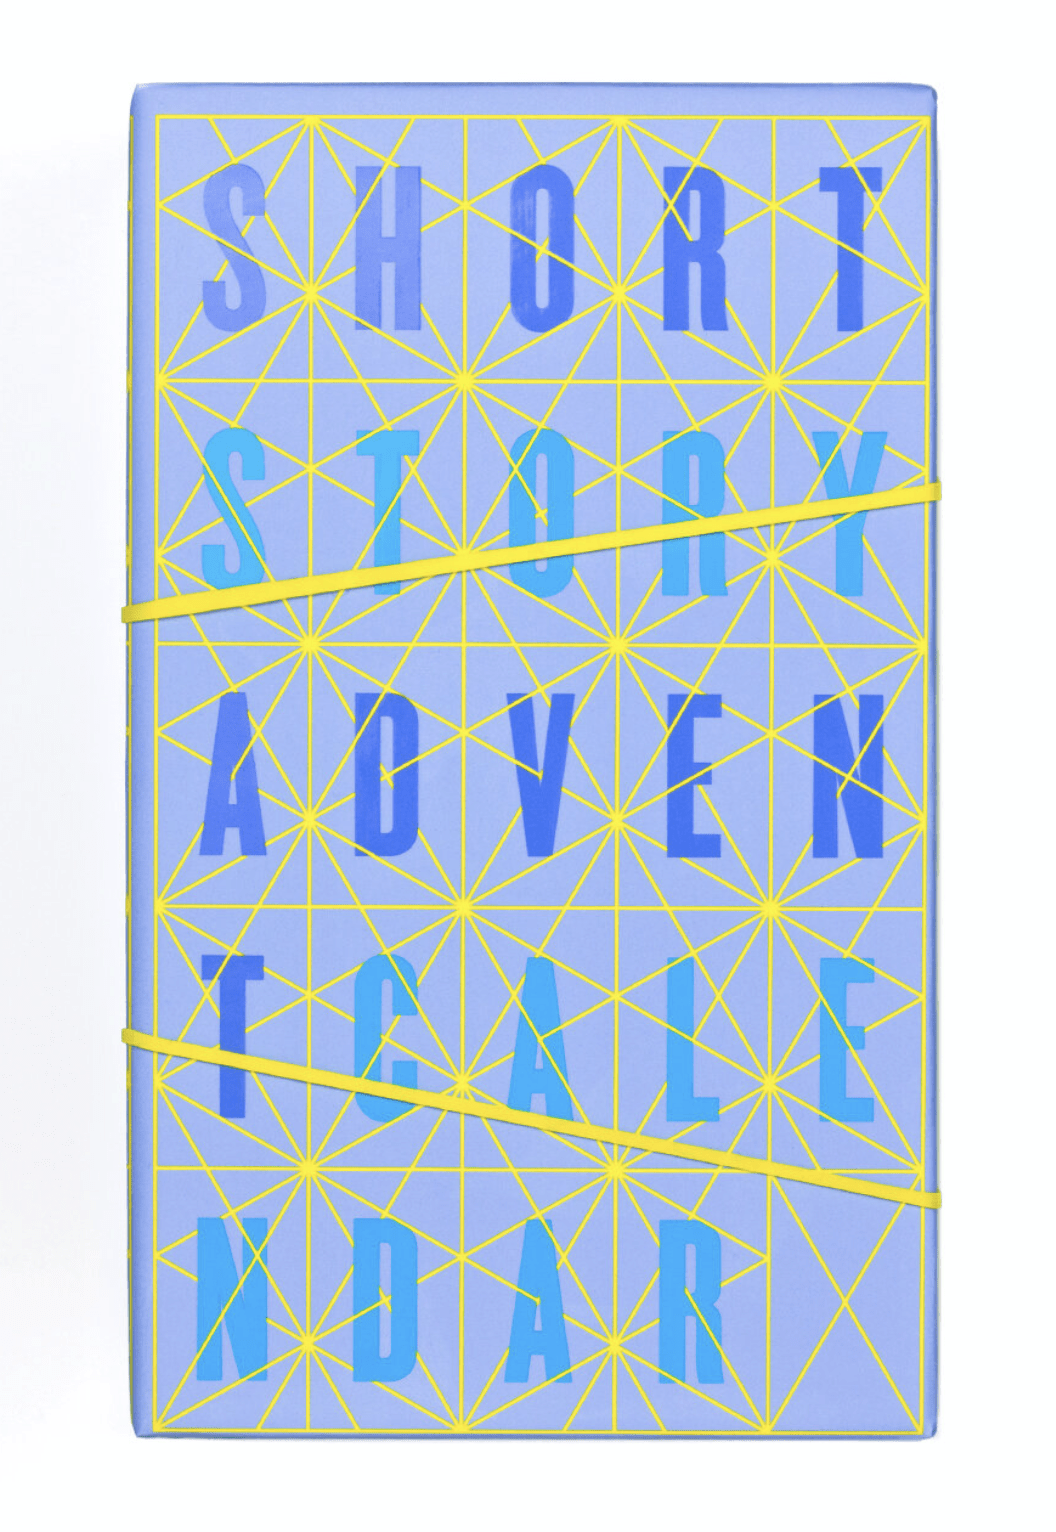 The 2020 Short Story Advent Calendar – On Sale Now